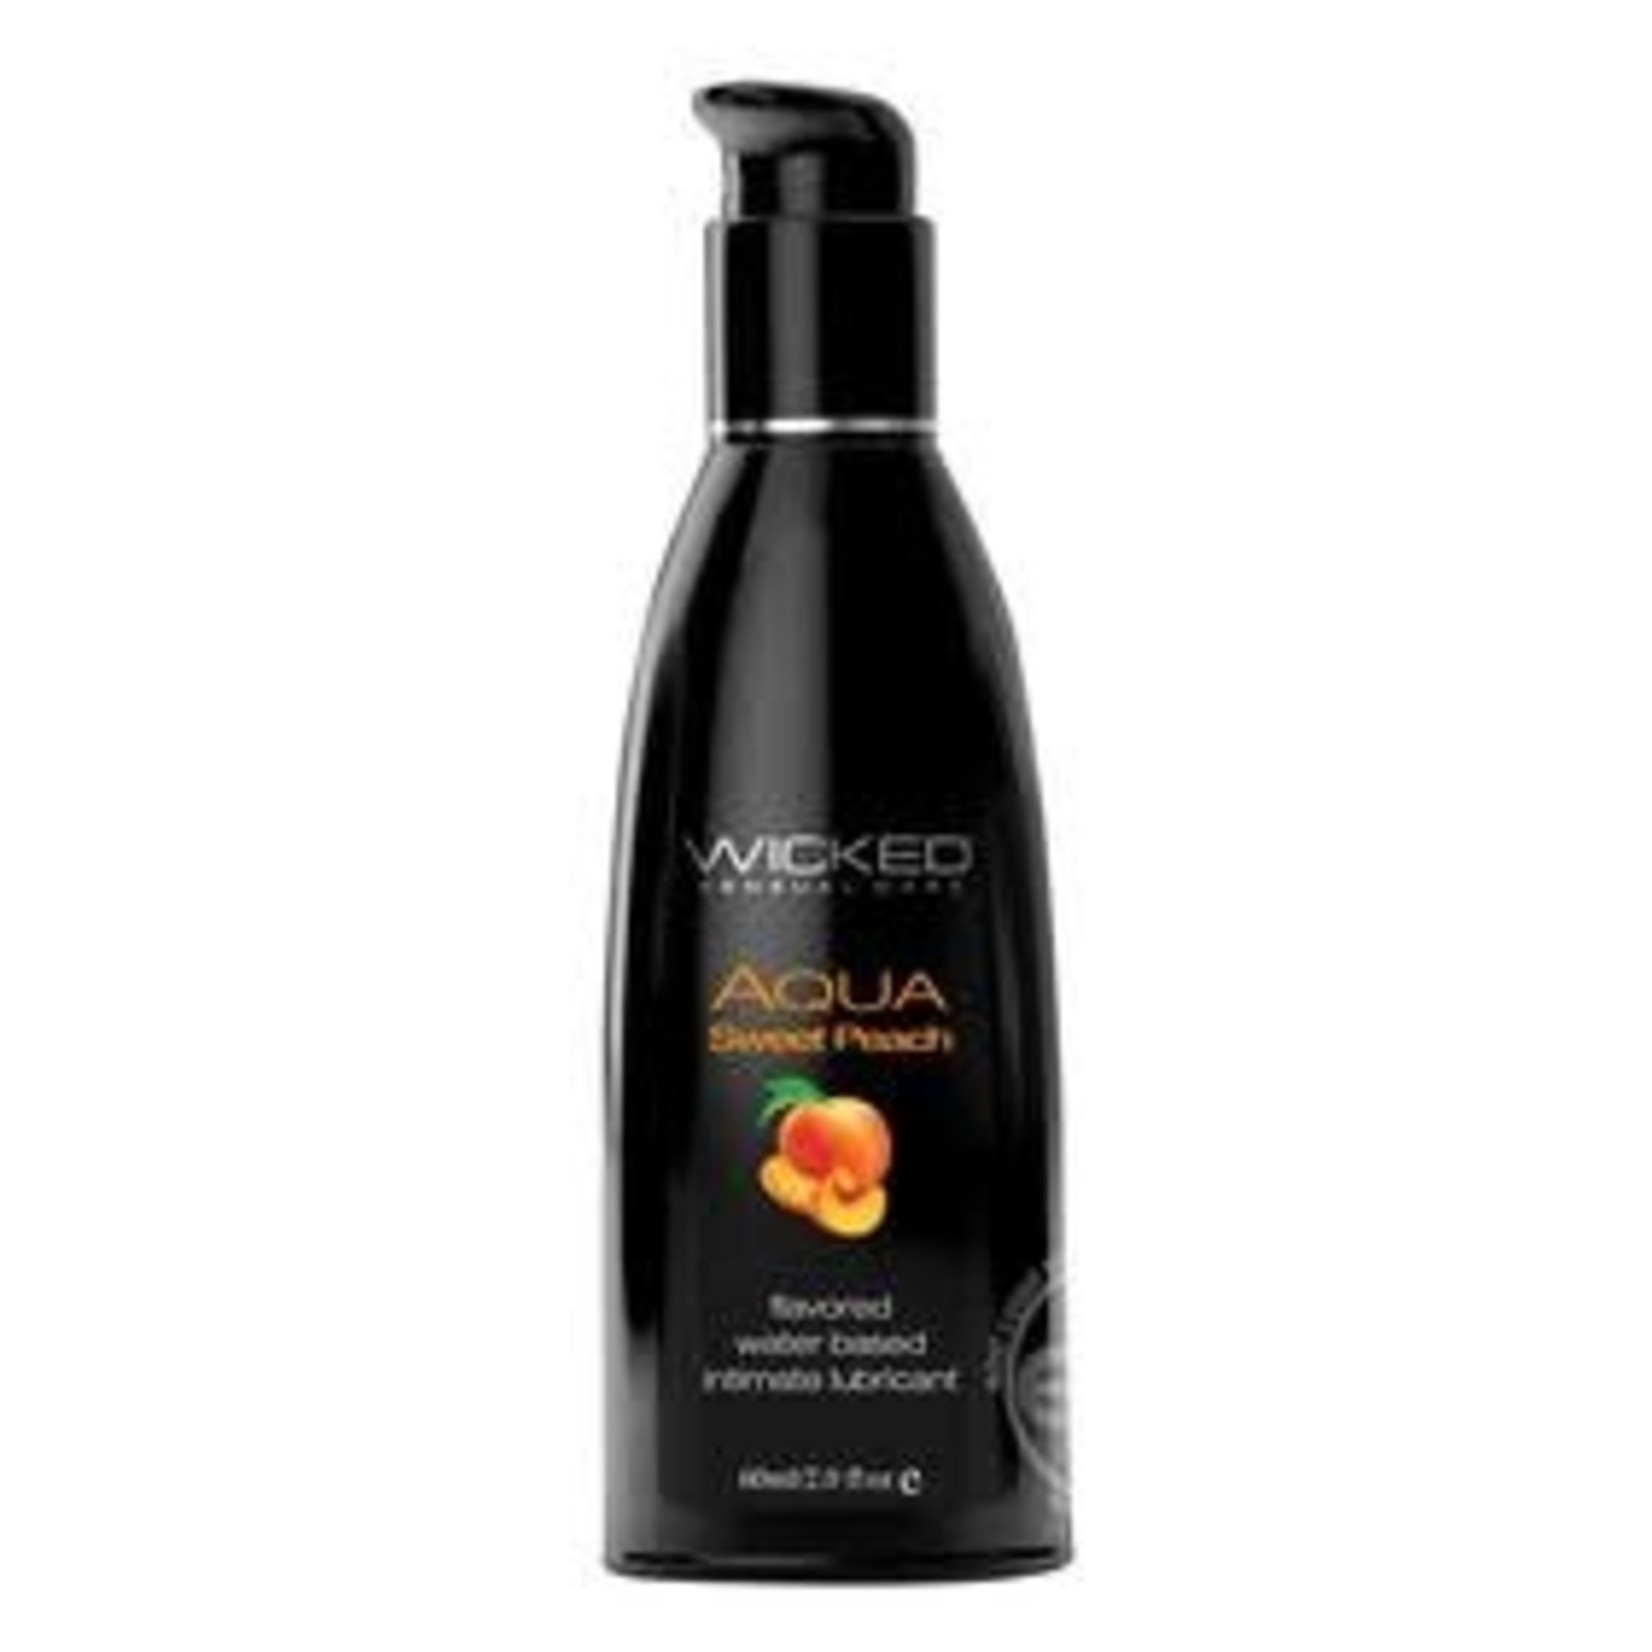 Wicked Aqua Water Based Flavored Lubricant Sweet Peach 2 oz